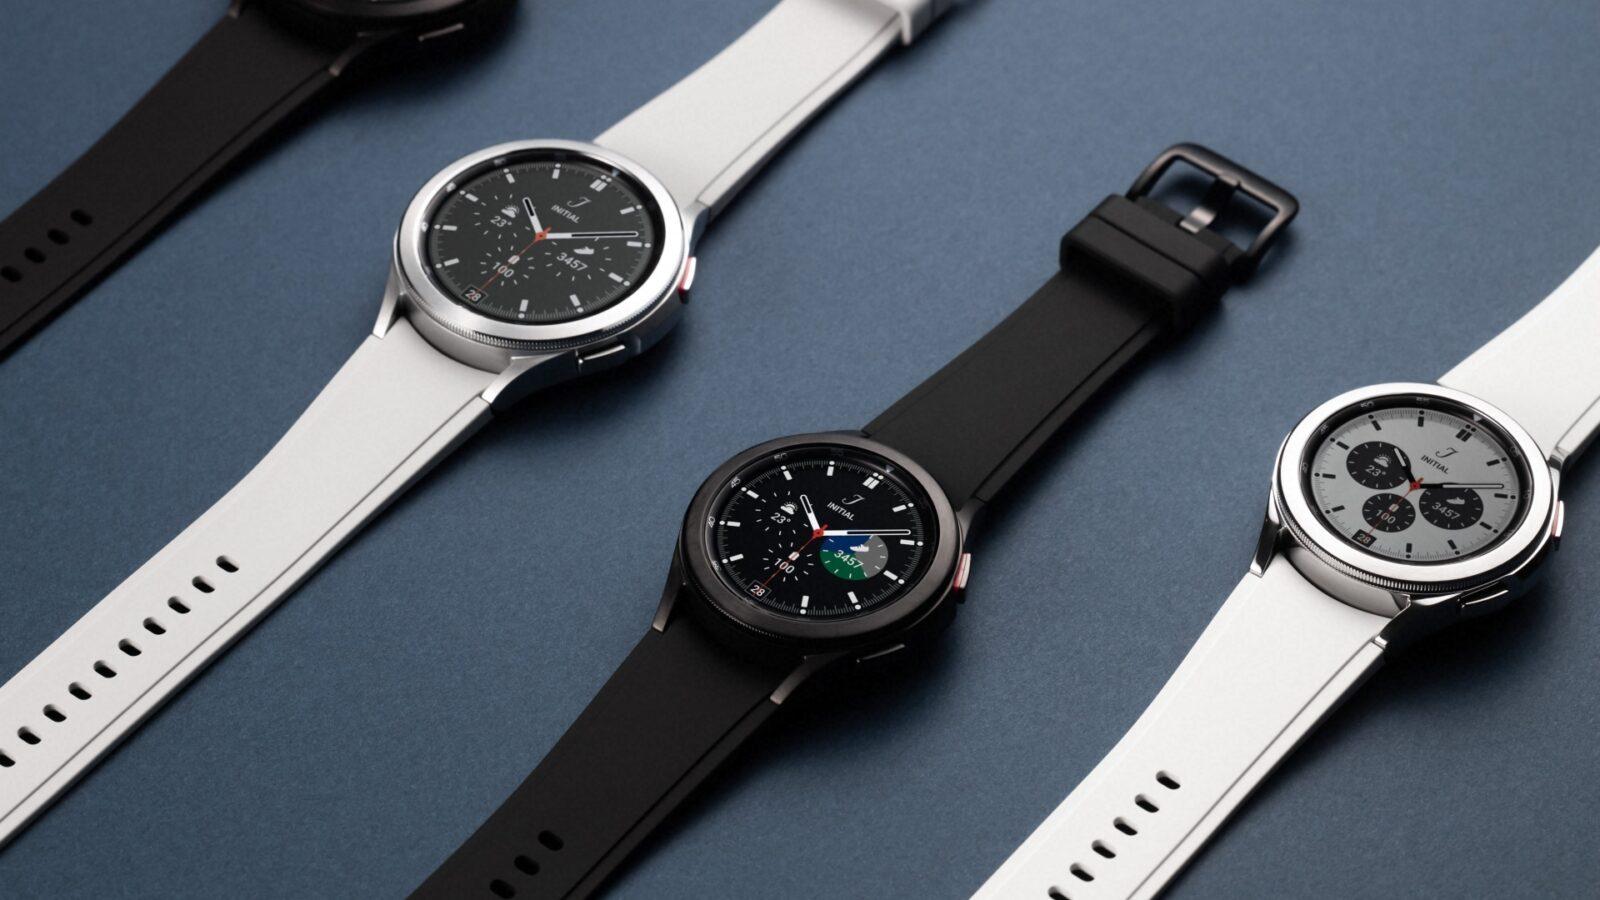 The WalkieTalkie app turns the Samsung Galaxy Watch 4 and Galaxy Watch 4 Classic smartwatch into a walkie-talkie